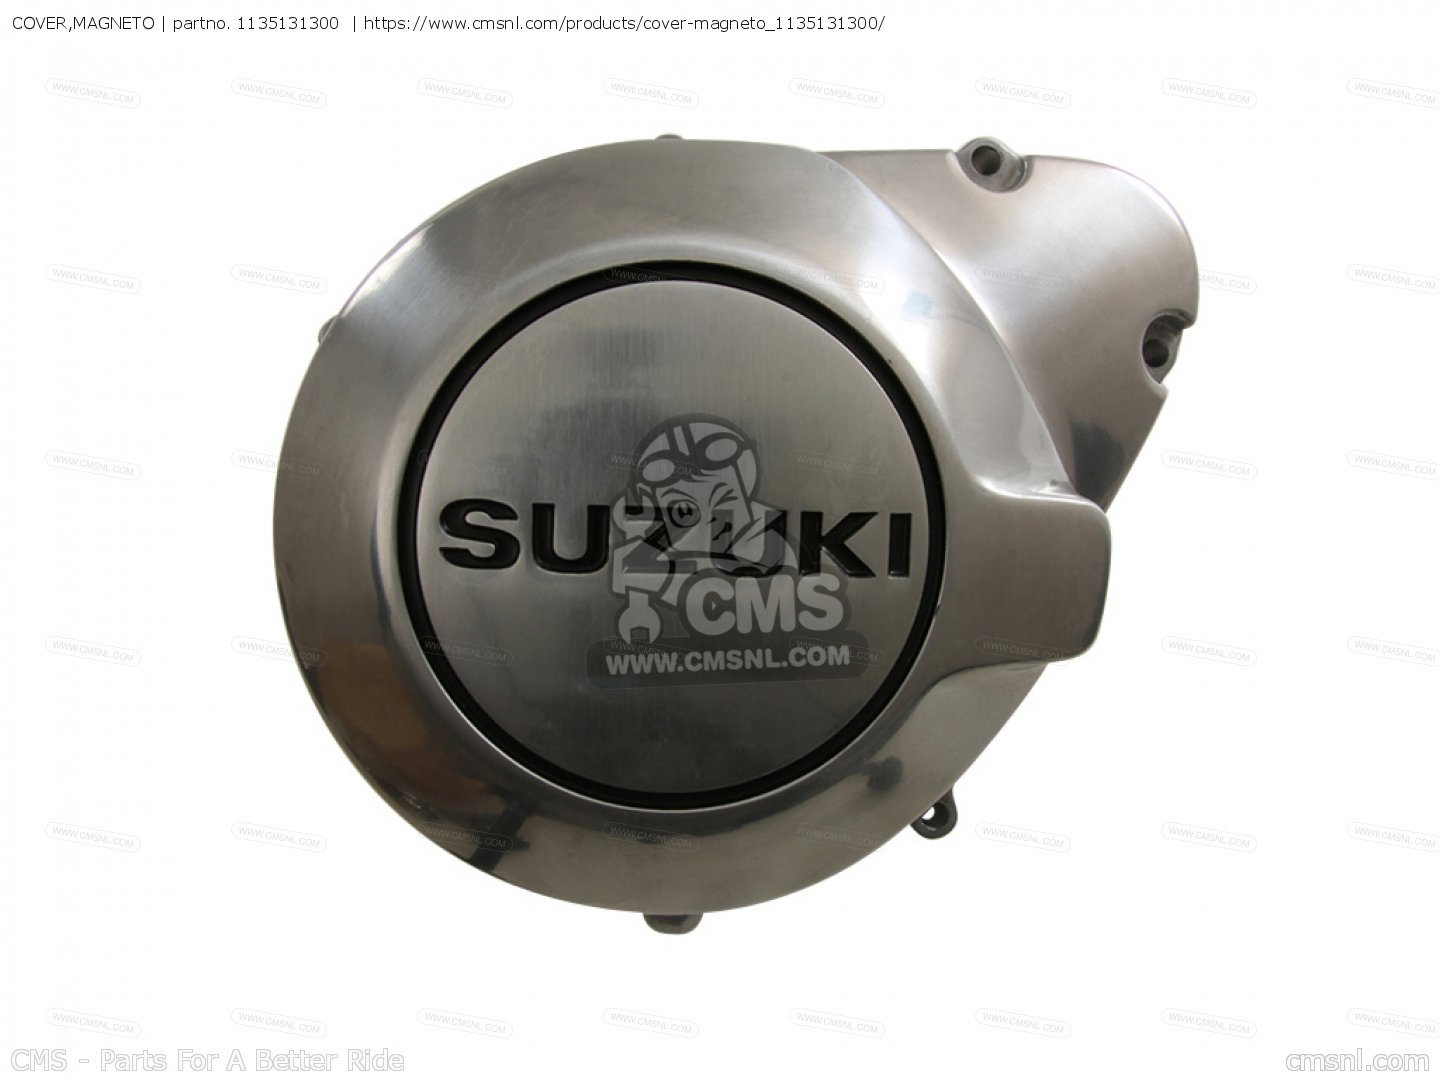 1135131300: Cover,magneto Suzuki - buy the 11351-31300 at CMSNL